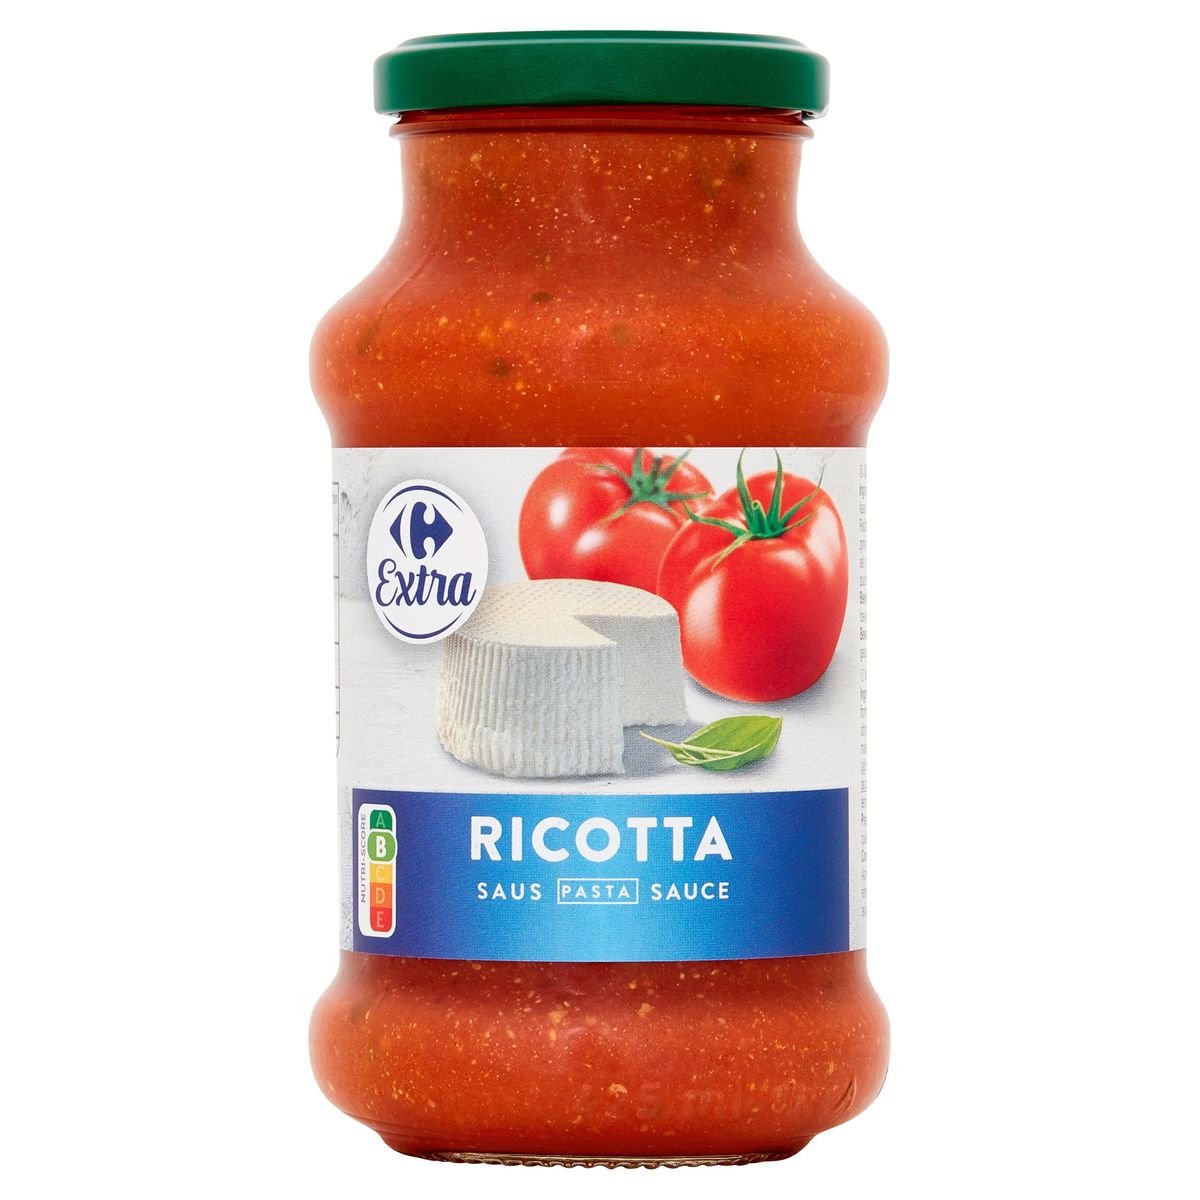 Carrefour Extra Ricotta Saus Pasta 400 g